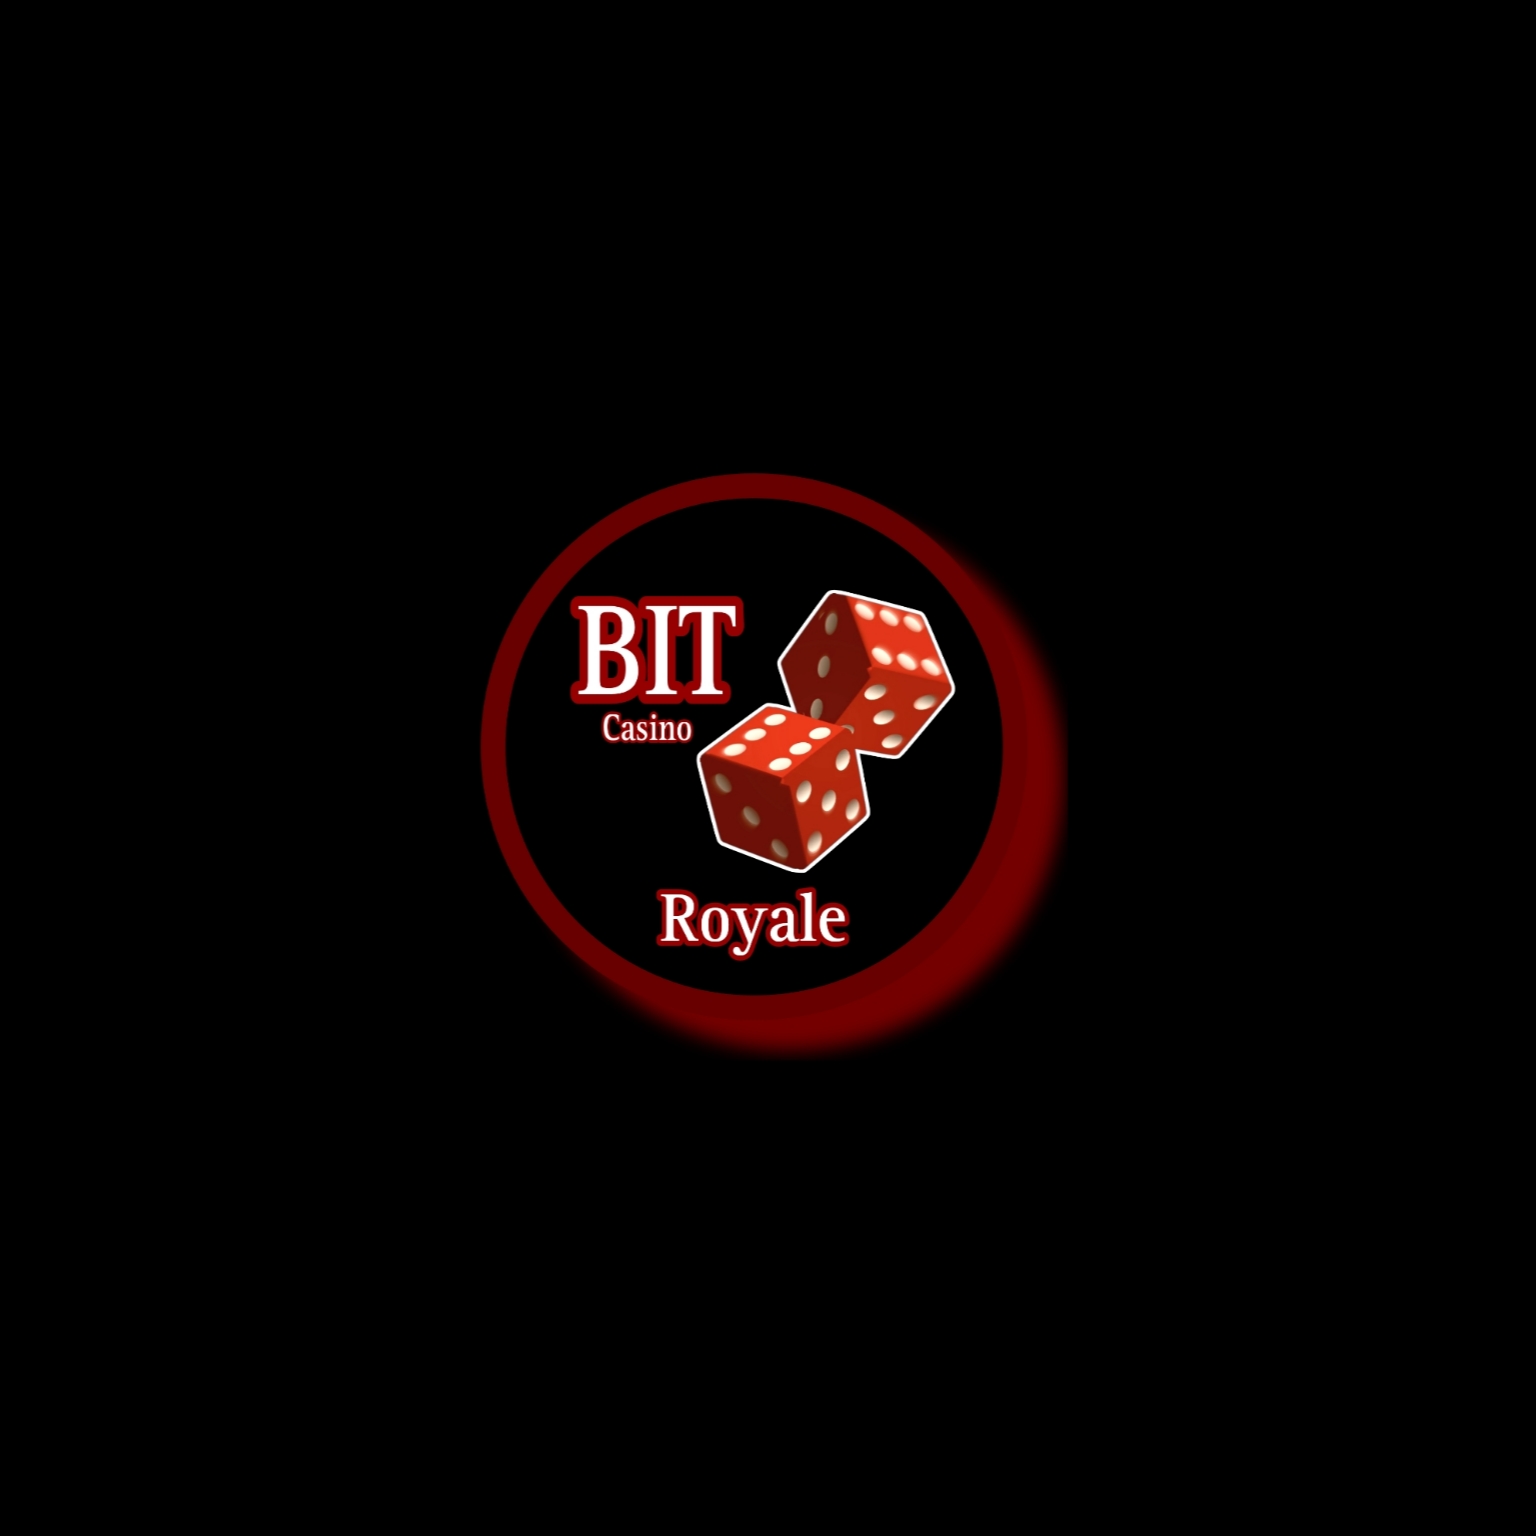 Bit Casino Royale